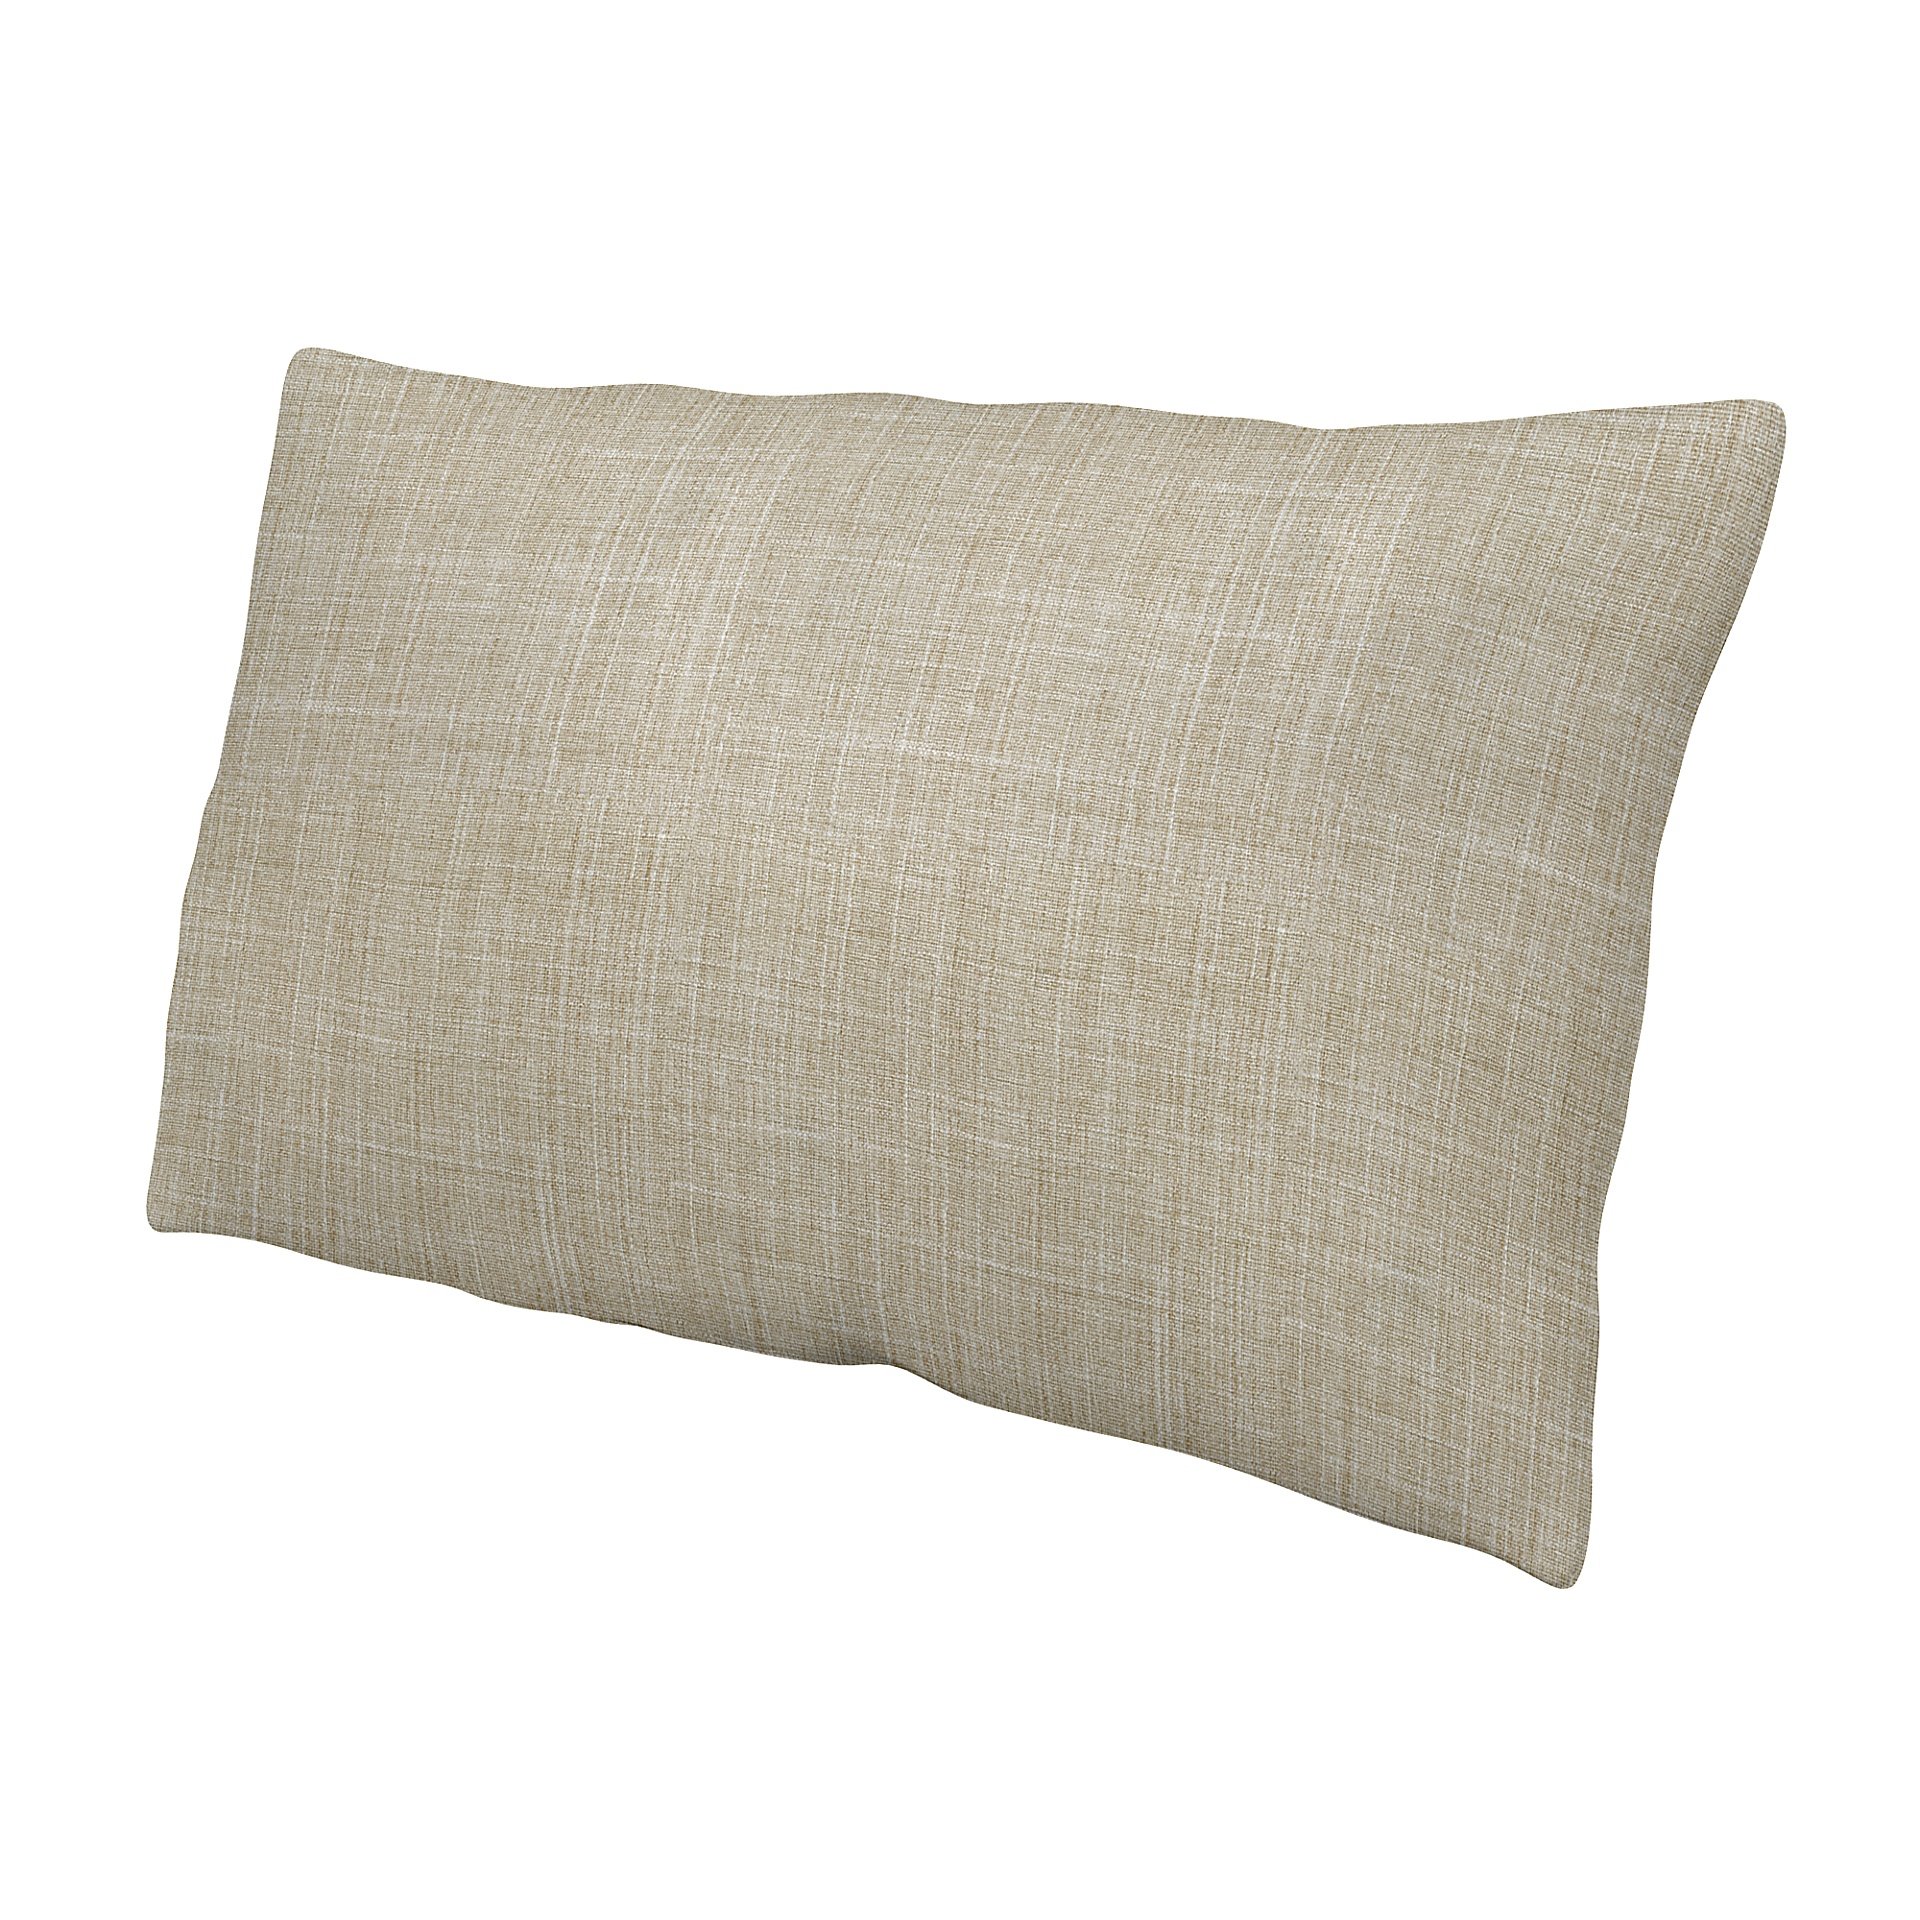 IKEA - Cushion Cover Ektorp 40x70 cm, Sand Beige, Boucle & Texture - Bemz